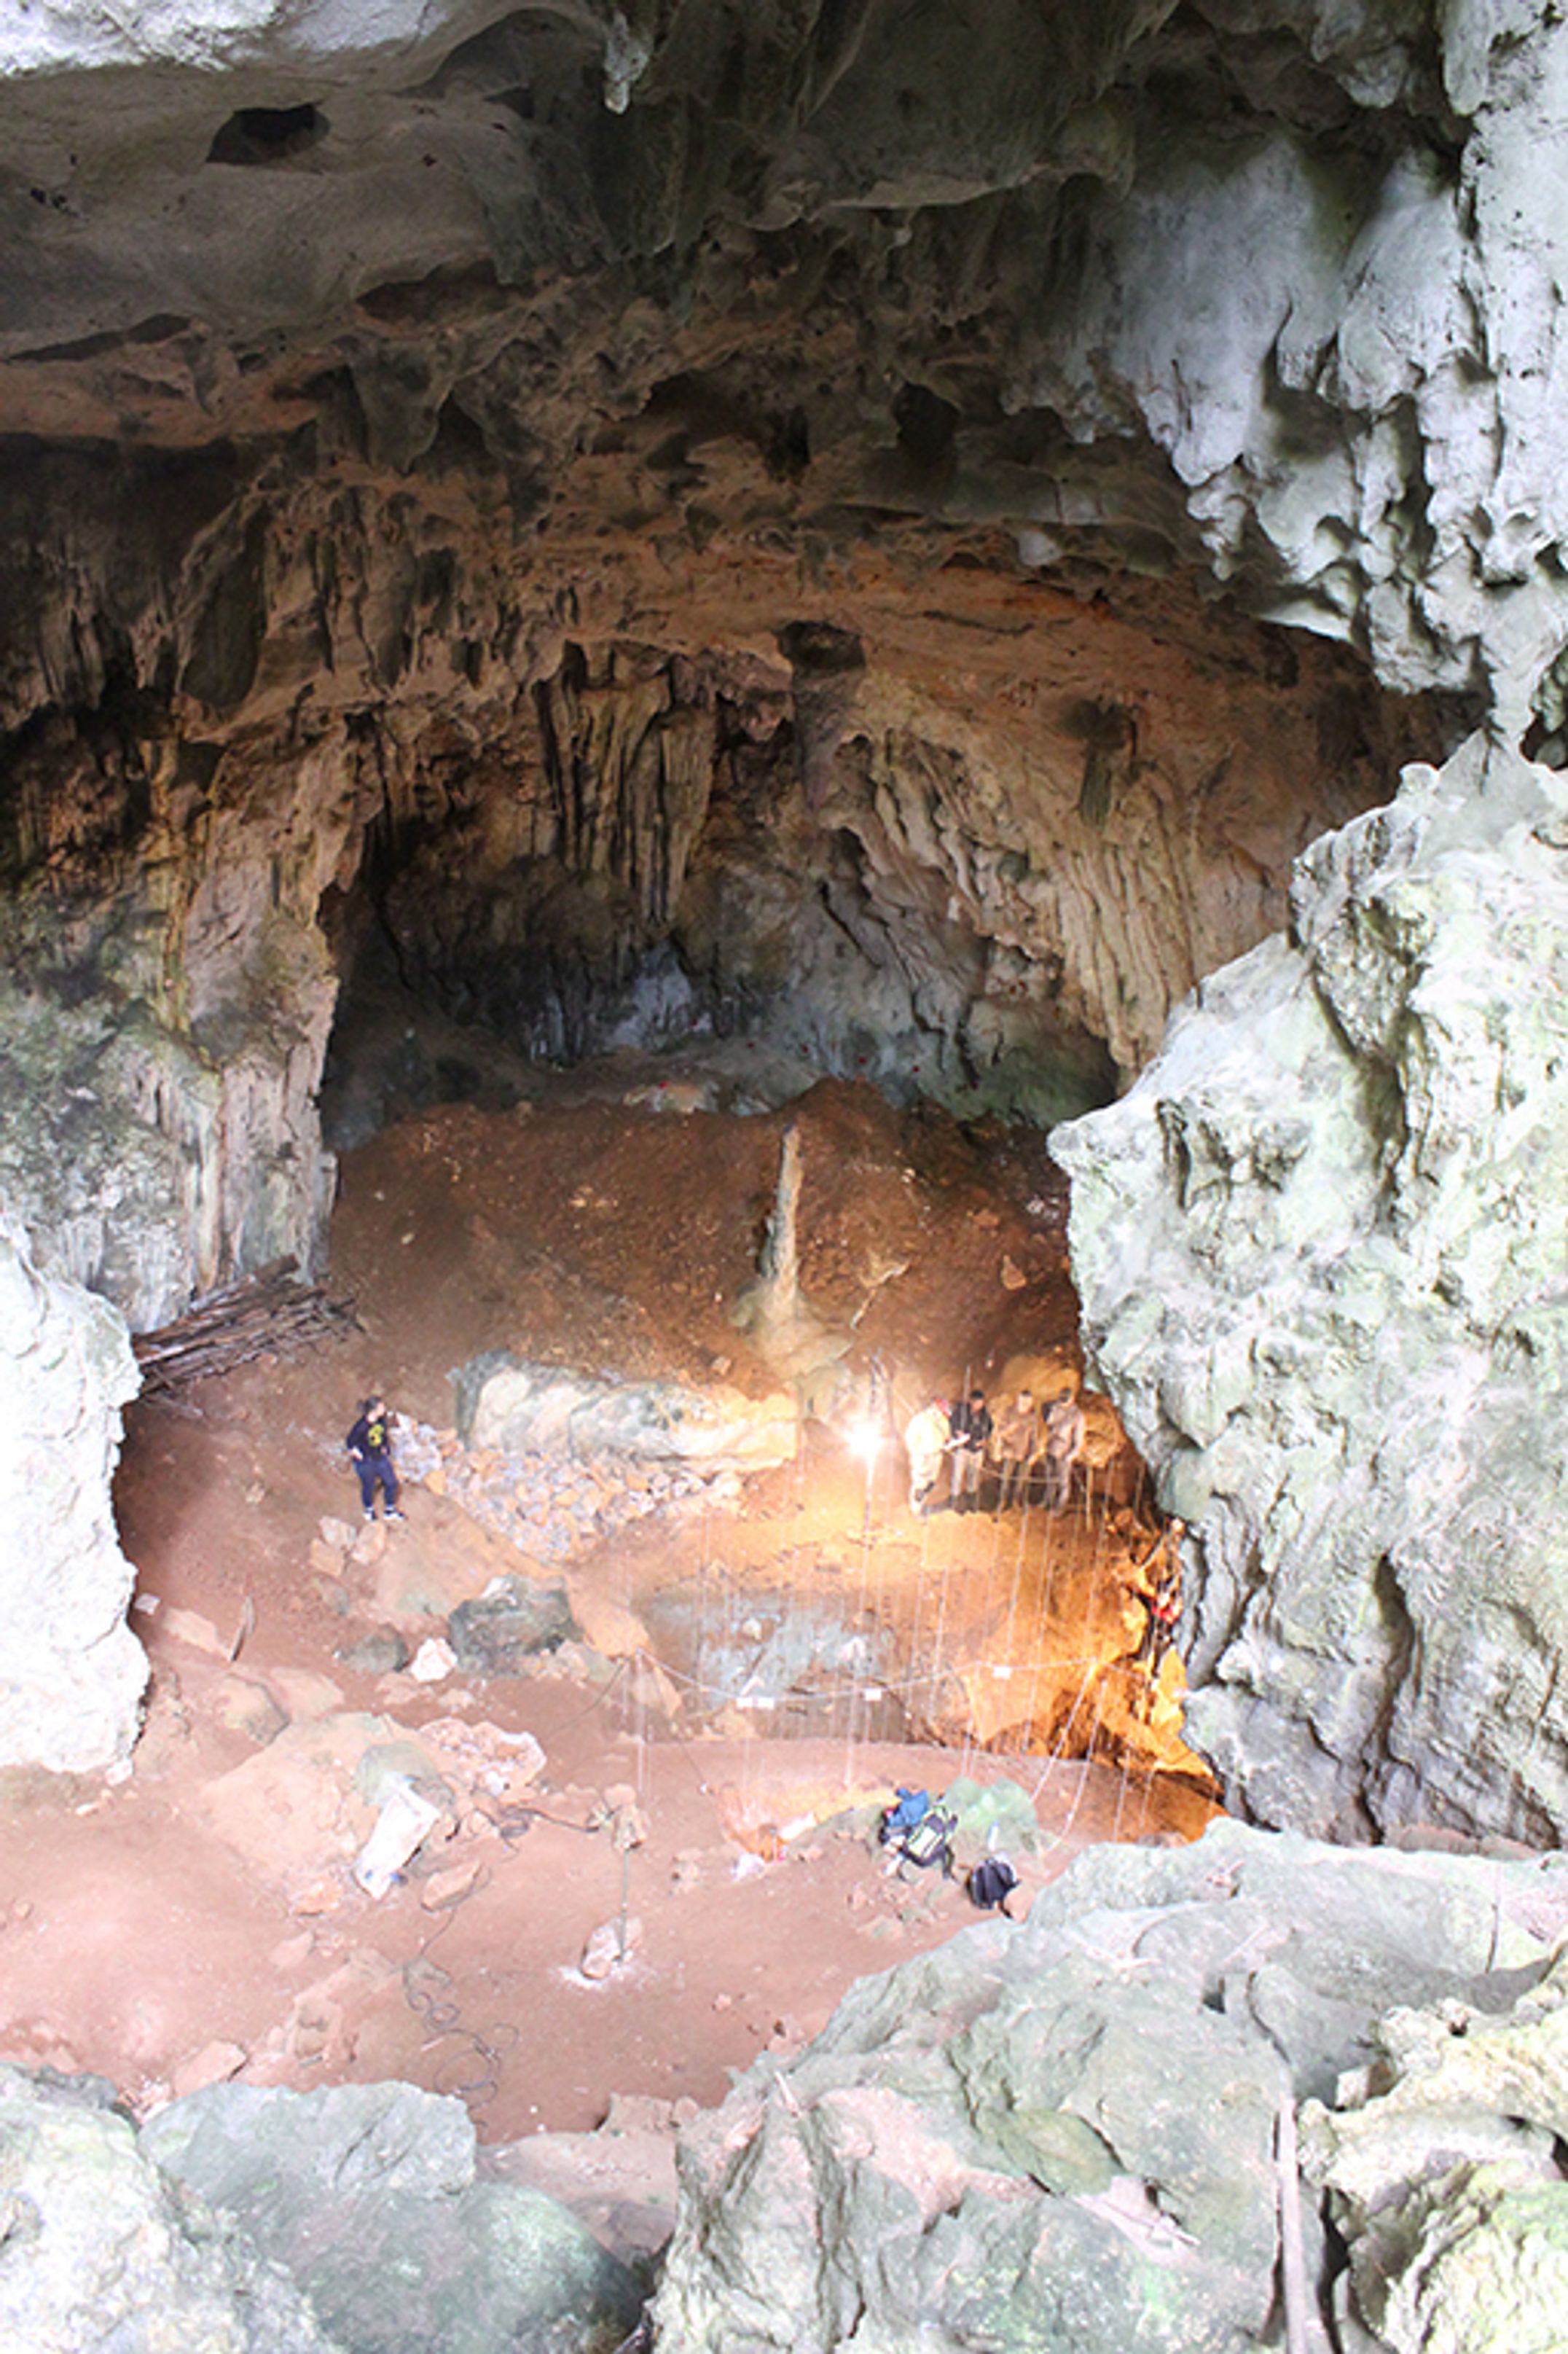 Tam Pa Ling cave sediments_credit Kira Westaway